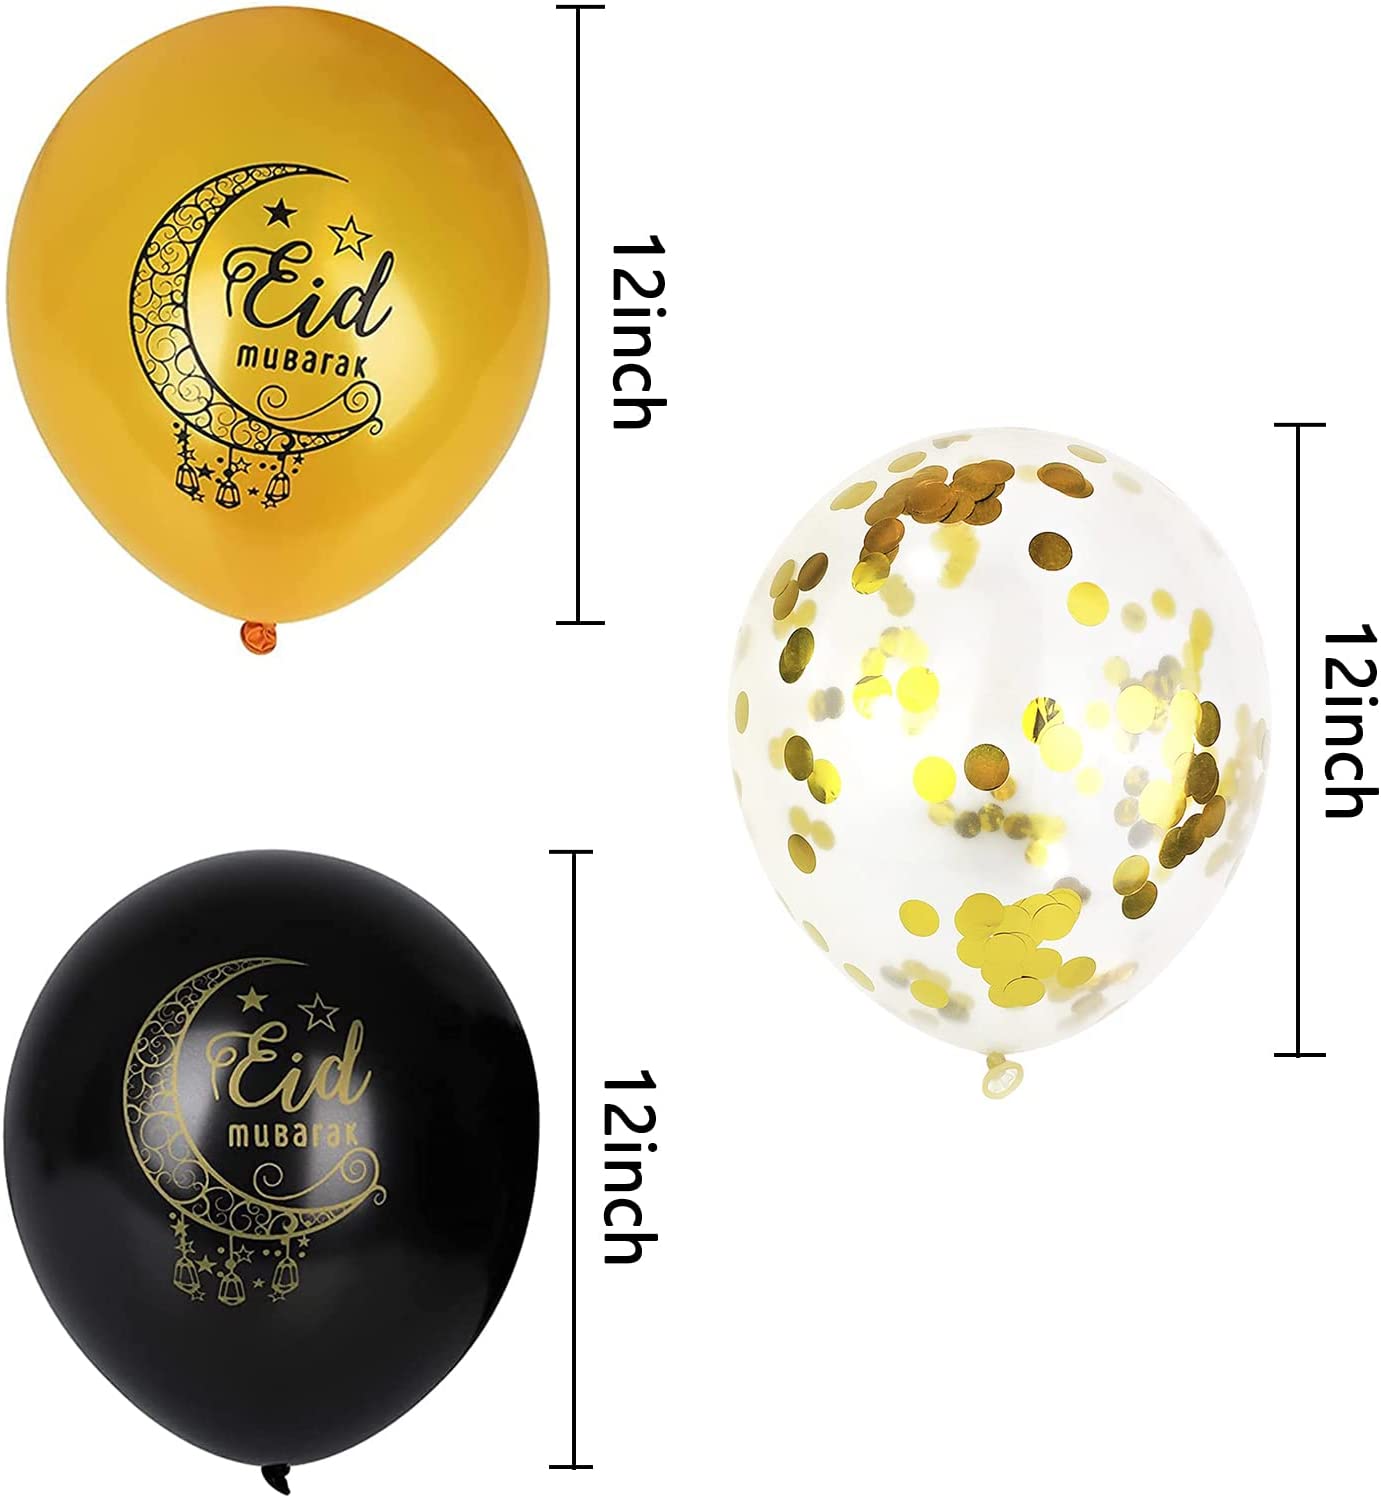 Eid Mubarak Decorations Set (2 Inch Eid Mubarak Latex Balloons+Eid Mubarak Foil Balloons)